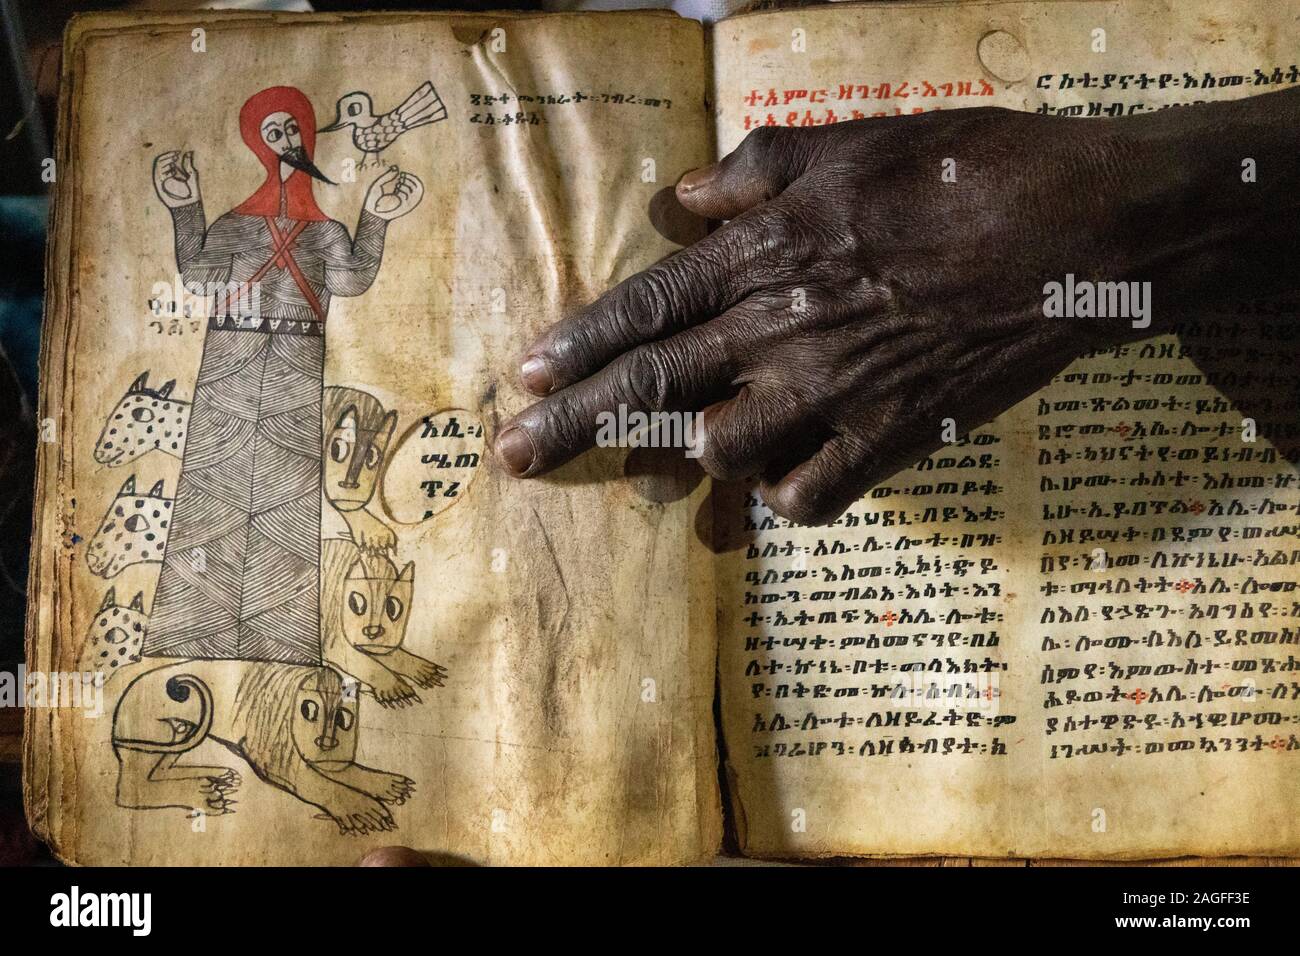 Ethiopia, Amhara Region, Lalibela, Arbatu Ensessa, Biblia Chirkos, ancient rock hewn church, priest’s hand on 800 year-old illuminated gospel showing Stock Photo